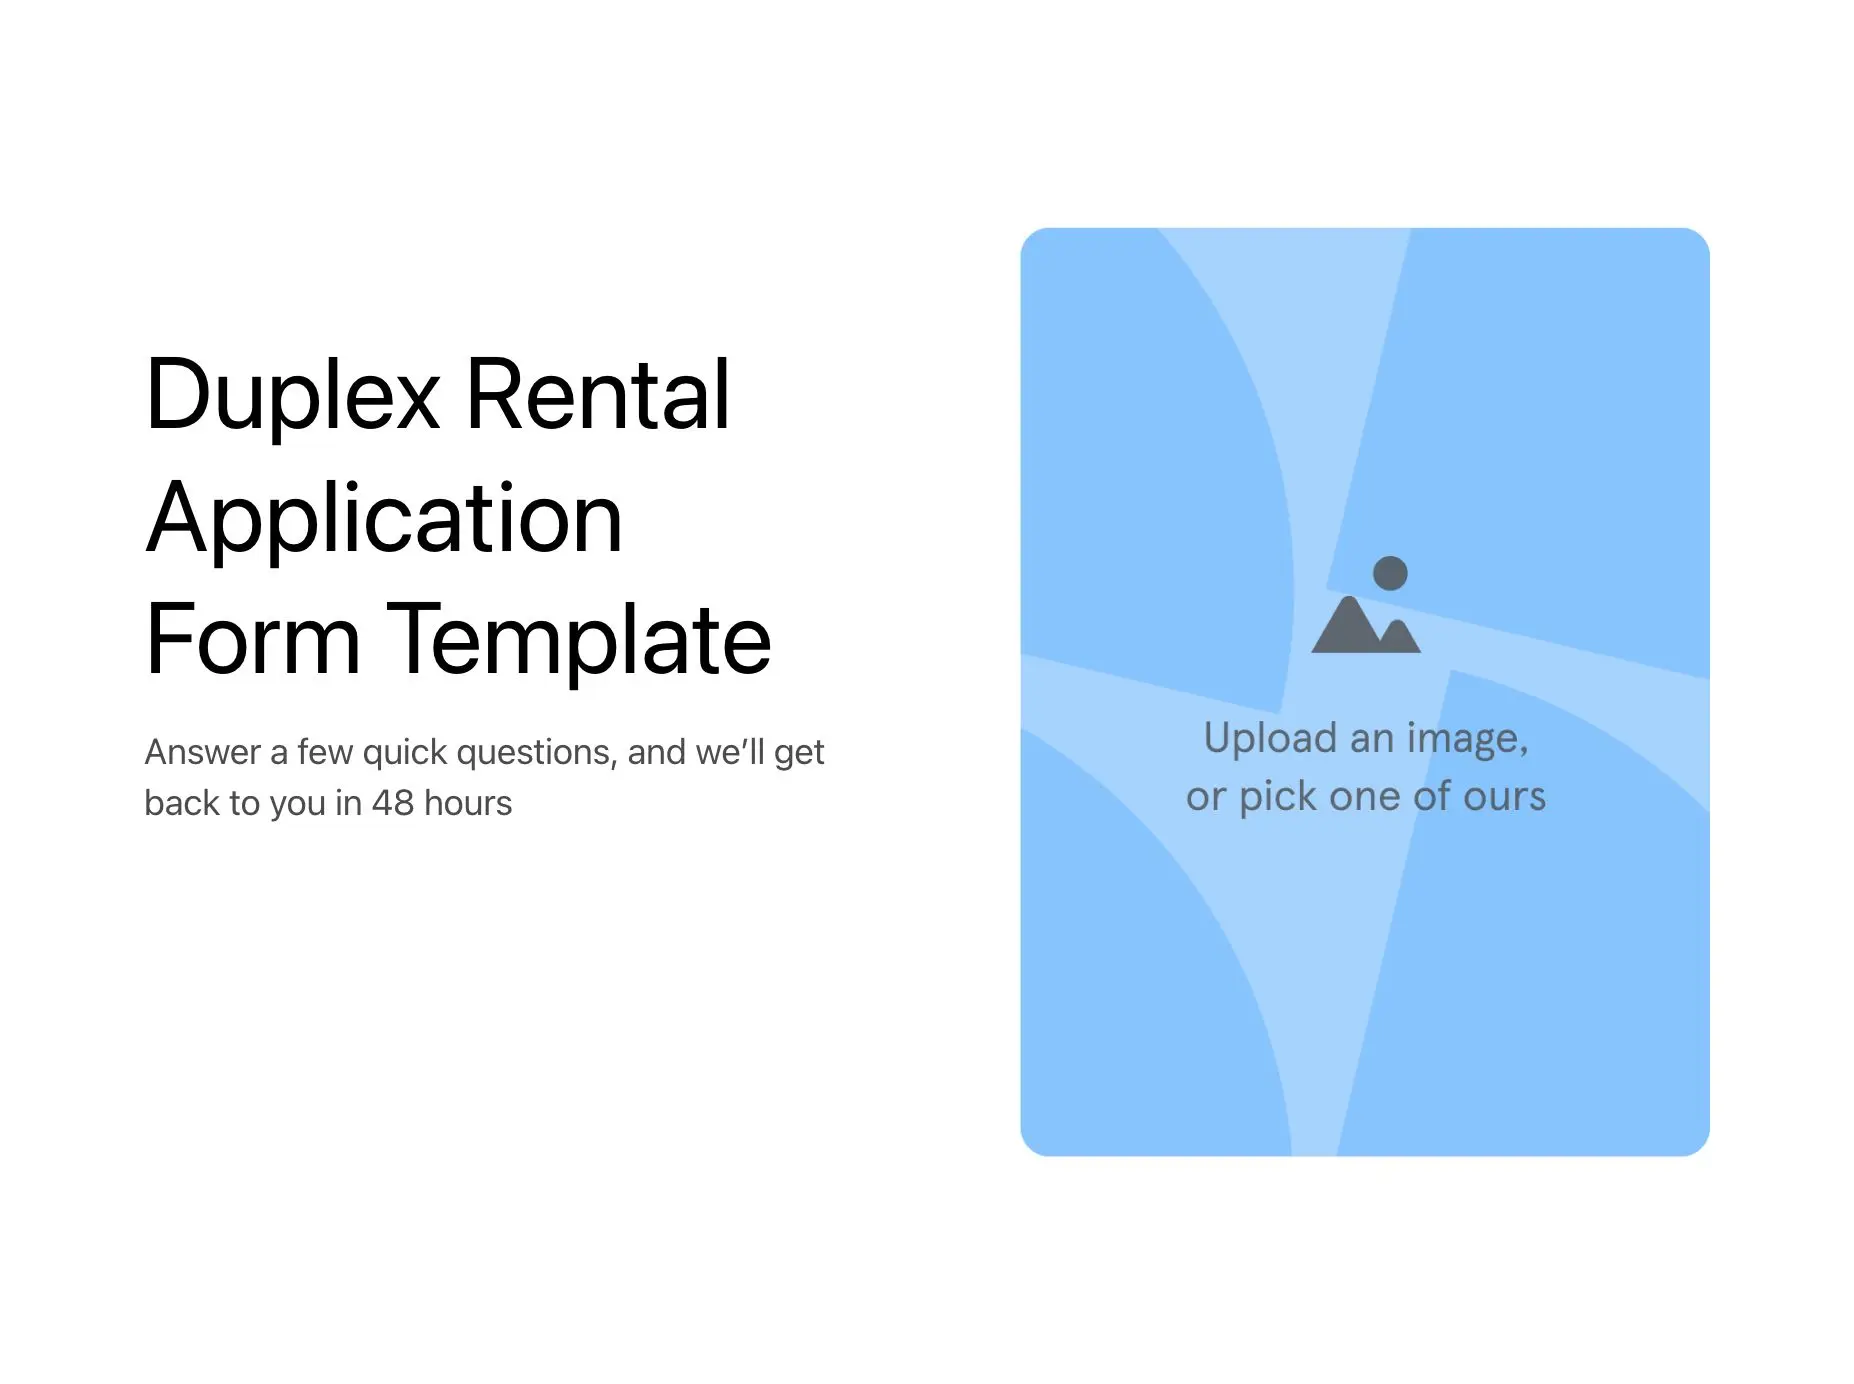 Duplex Rental Application Form Template Hero